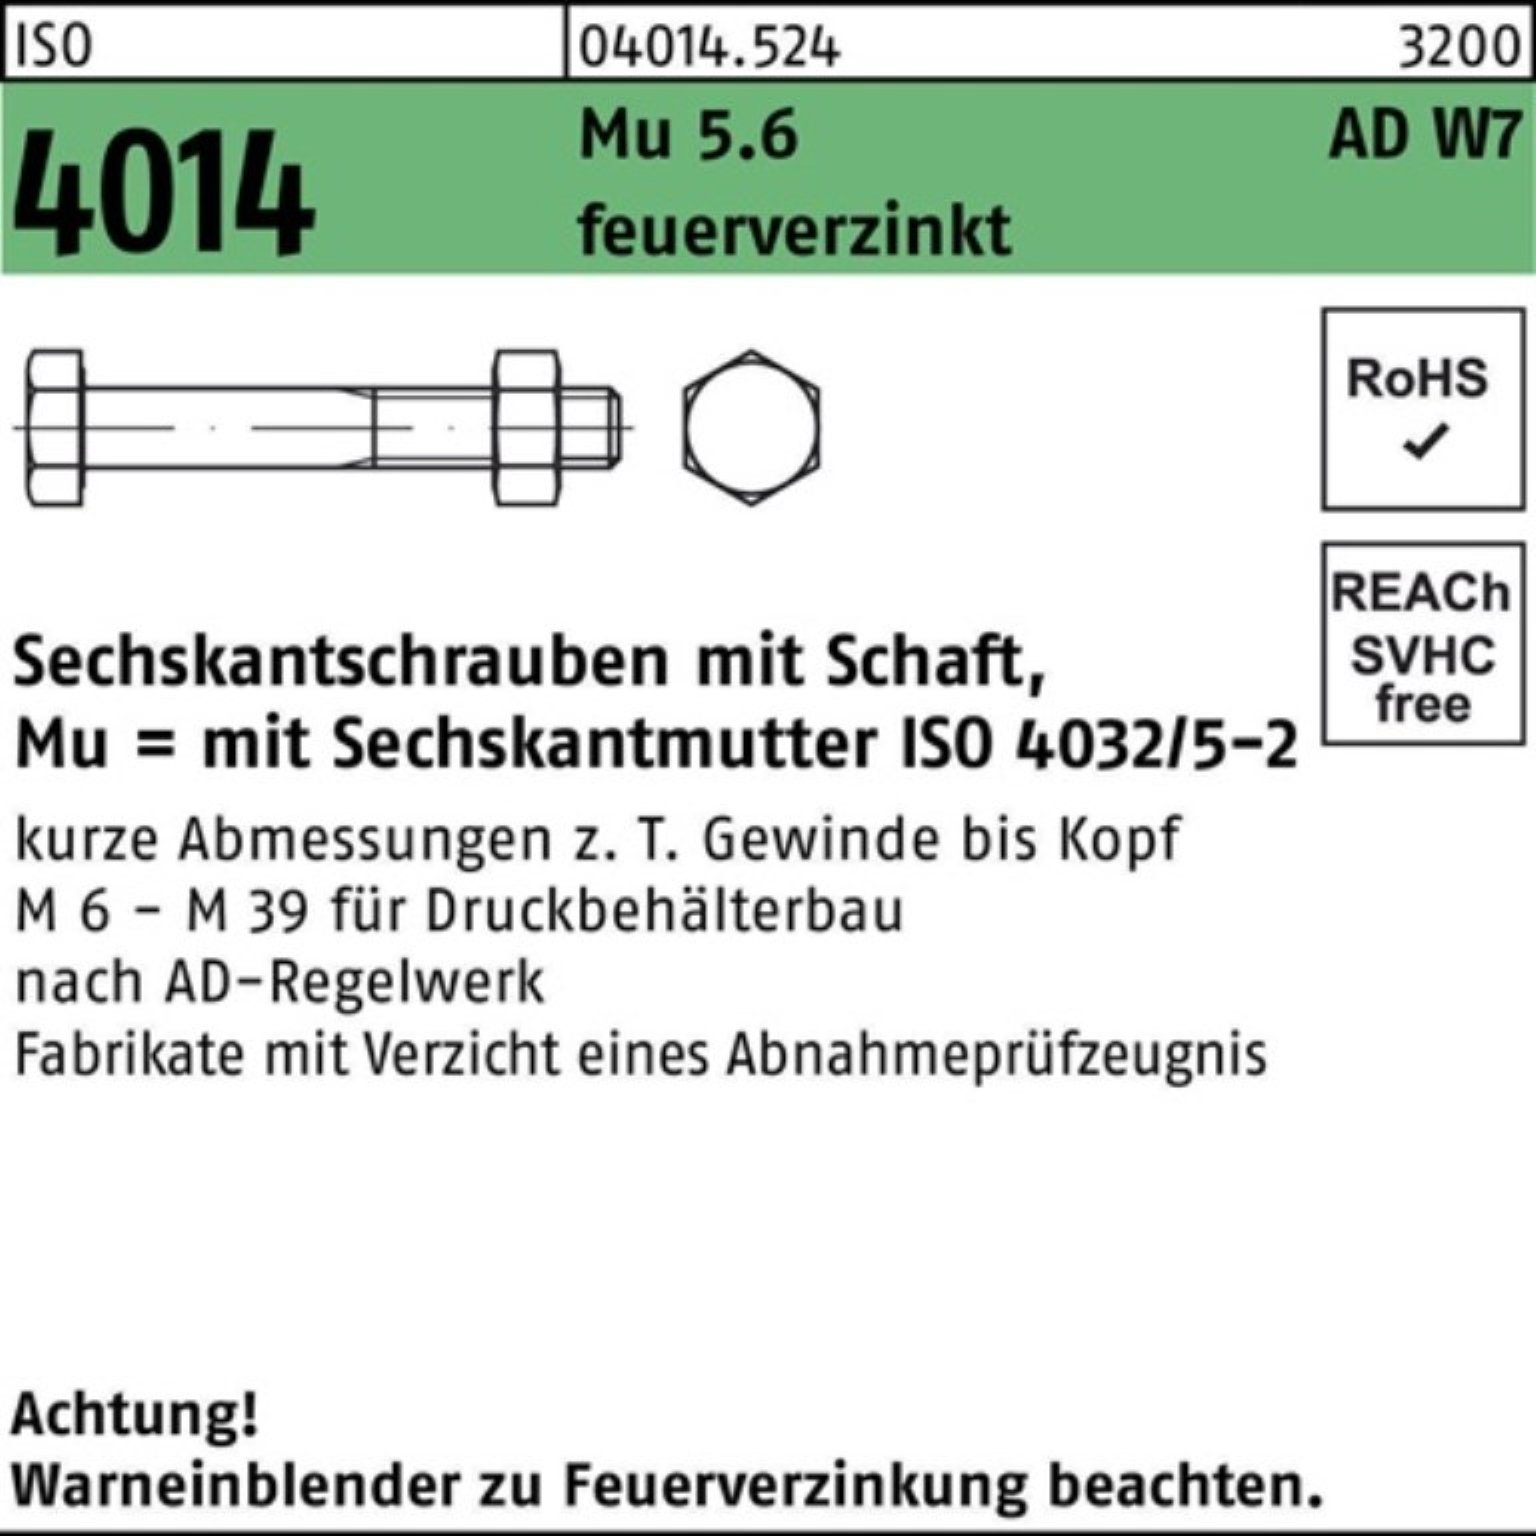 Bufab Sechskantschraube 100er Pack Sechskantschraube 5.6 M20x Schaft Mu 4014 feuerv ISO 170 W7